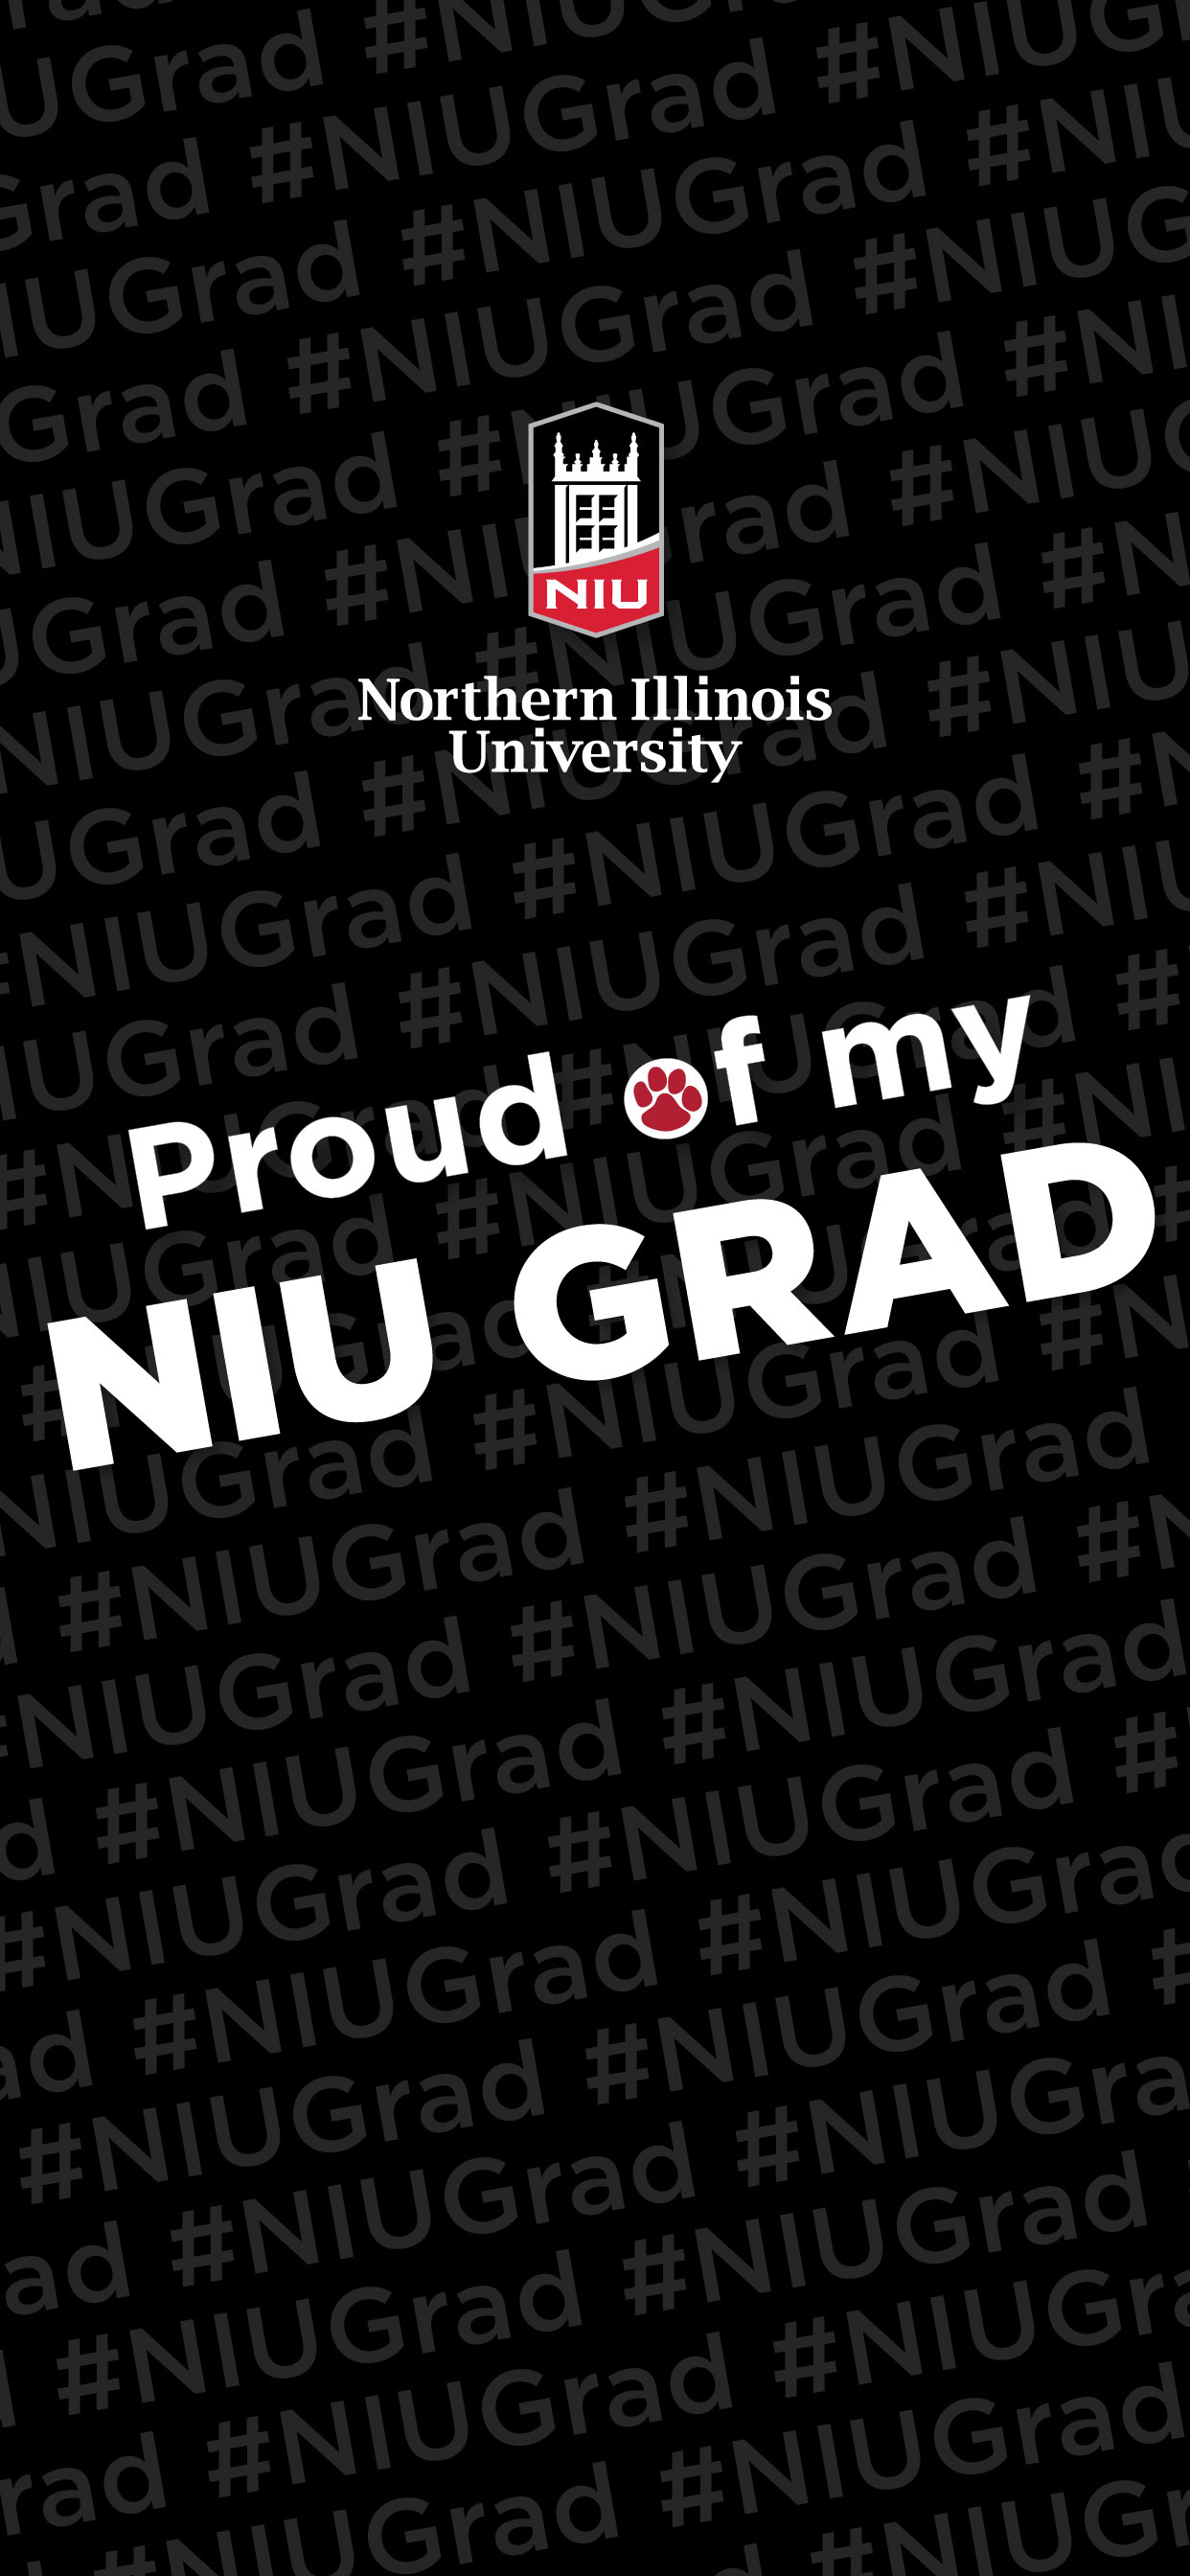 Proud NIU Grad Parent - Black iPhone background